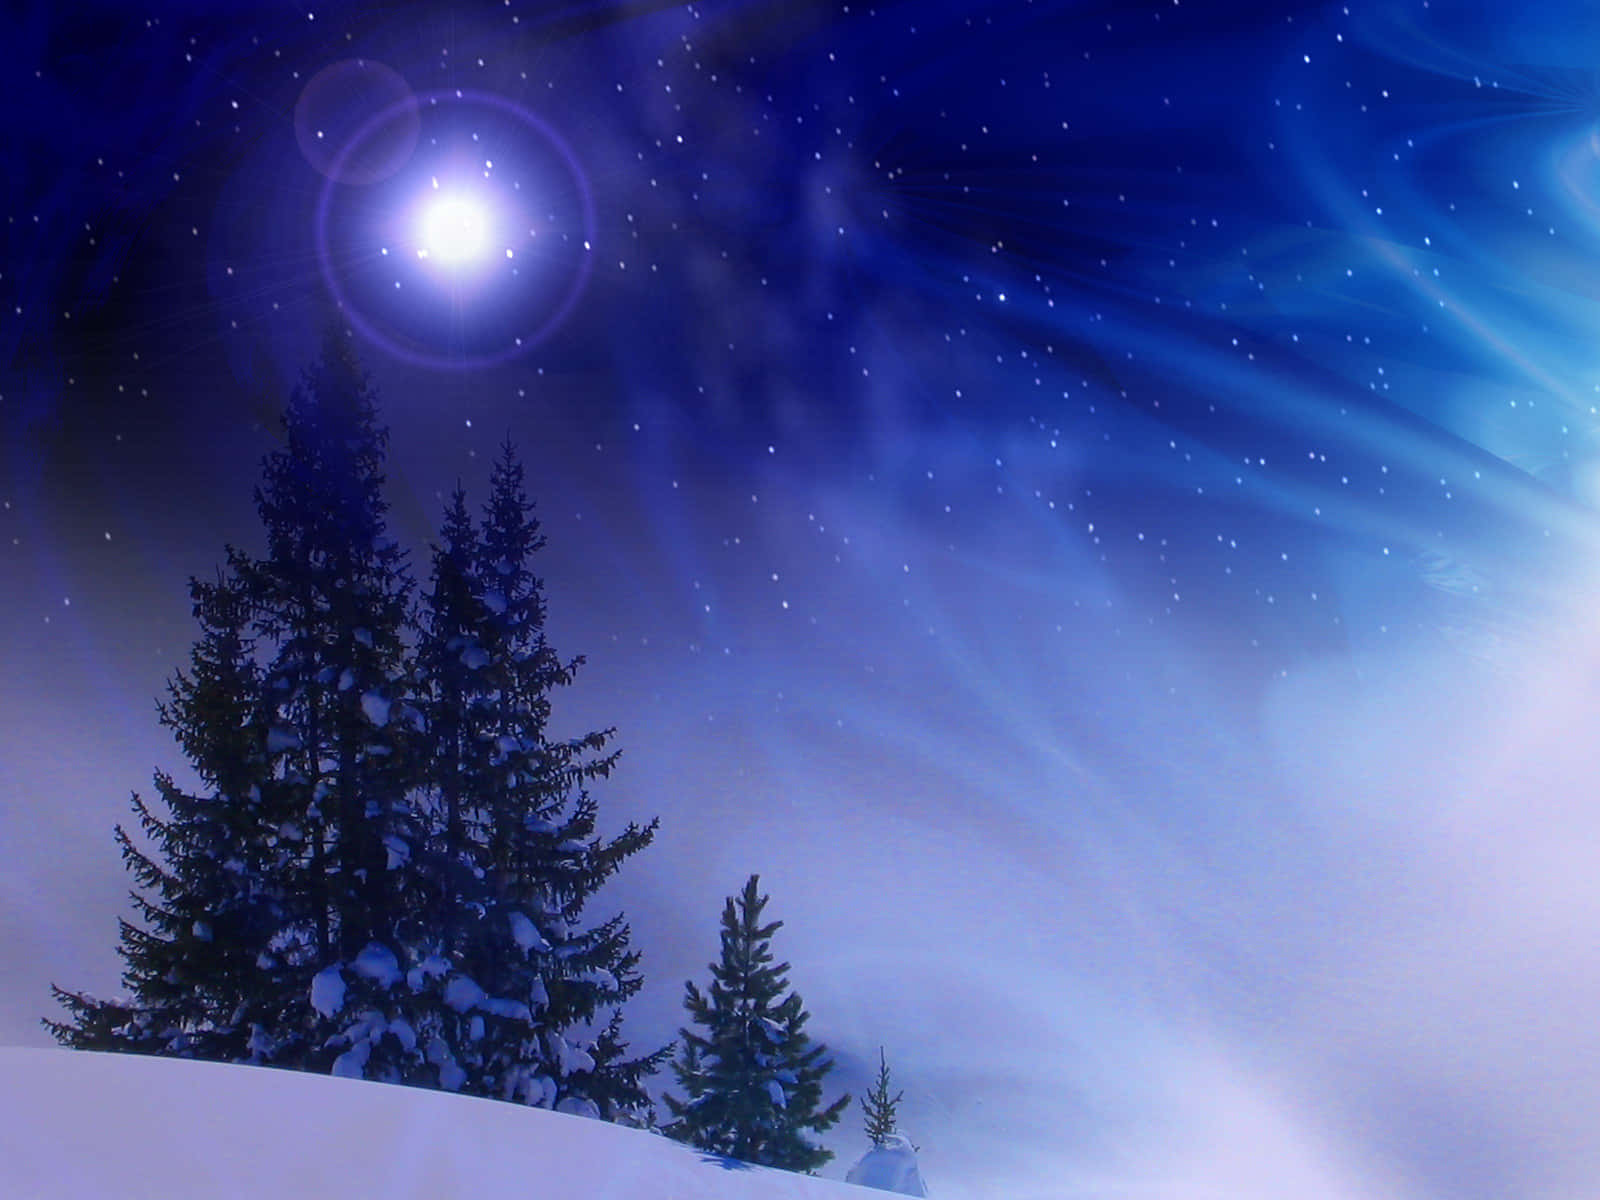 The Dark Winter Night Captured in Detailed Desktop Wallpaper Wallpaper